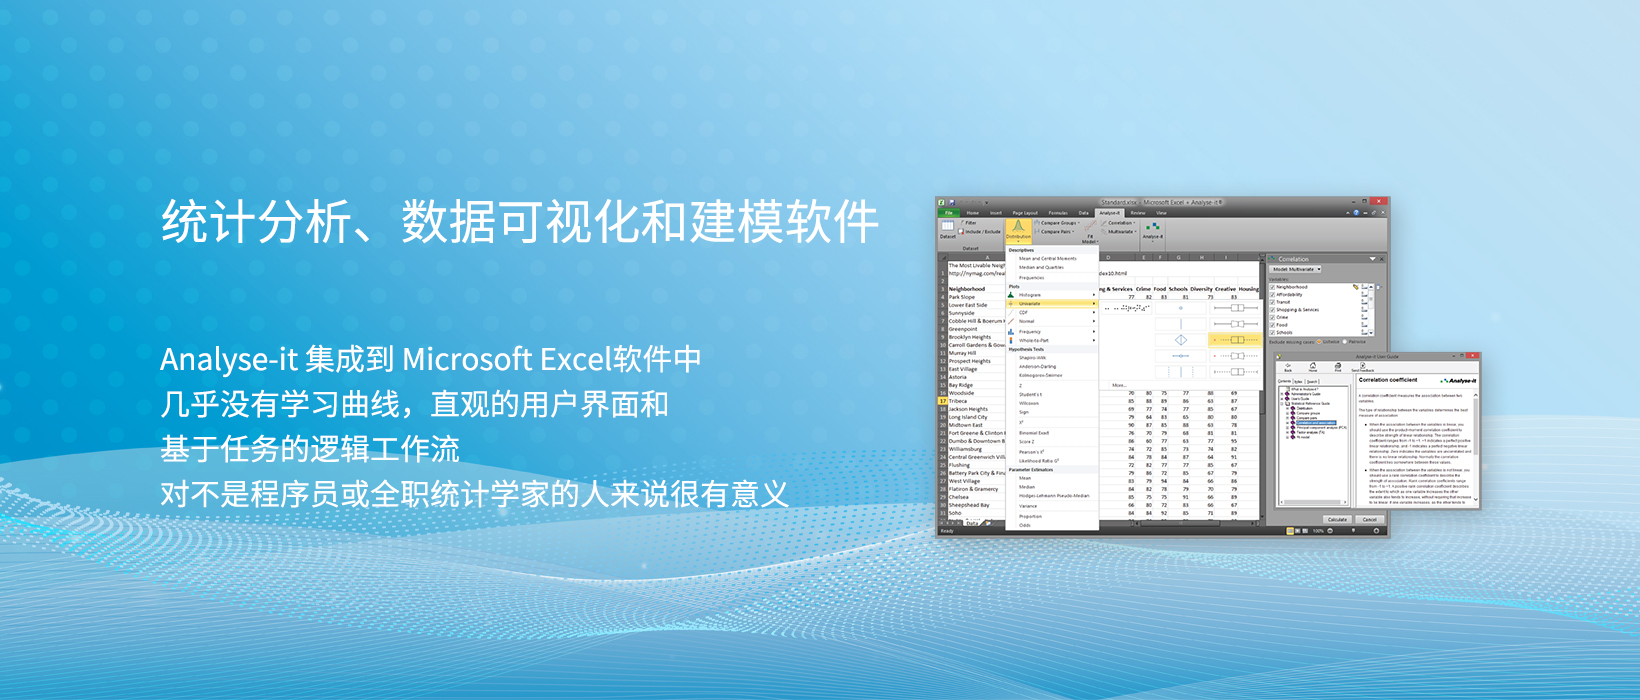 【Excel统计分析插件】上海道宁为您提供统计分析、数据可视化和建模软件——Analyse-it